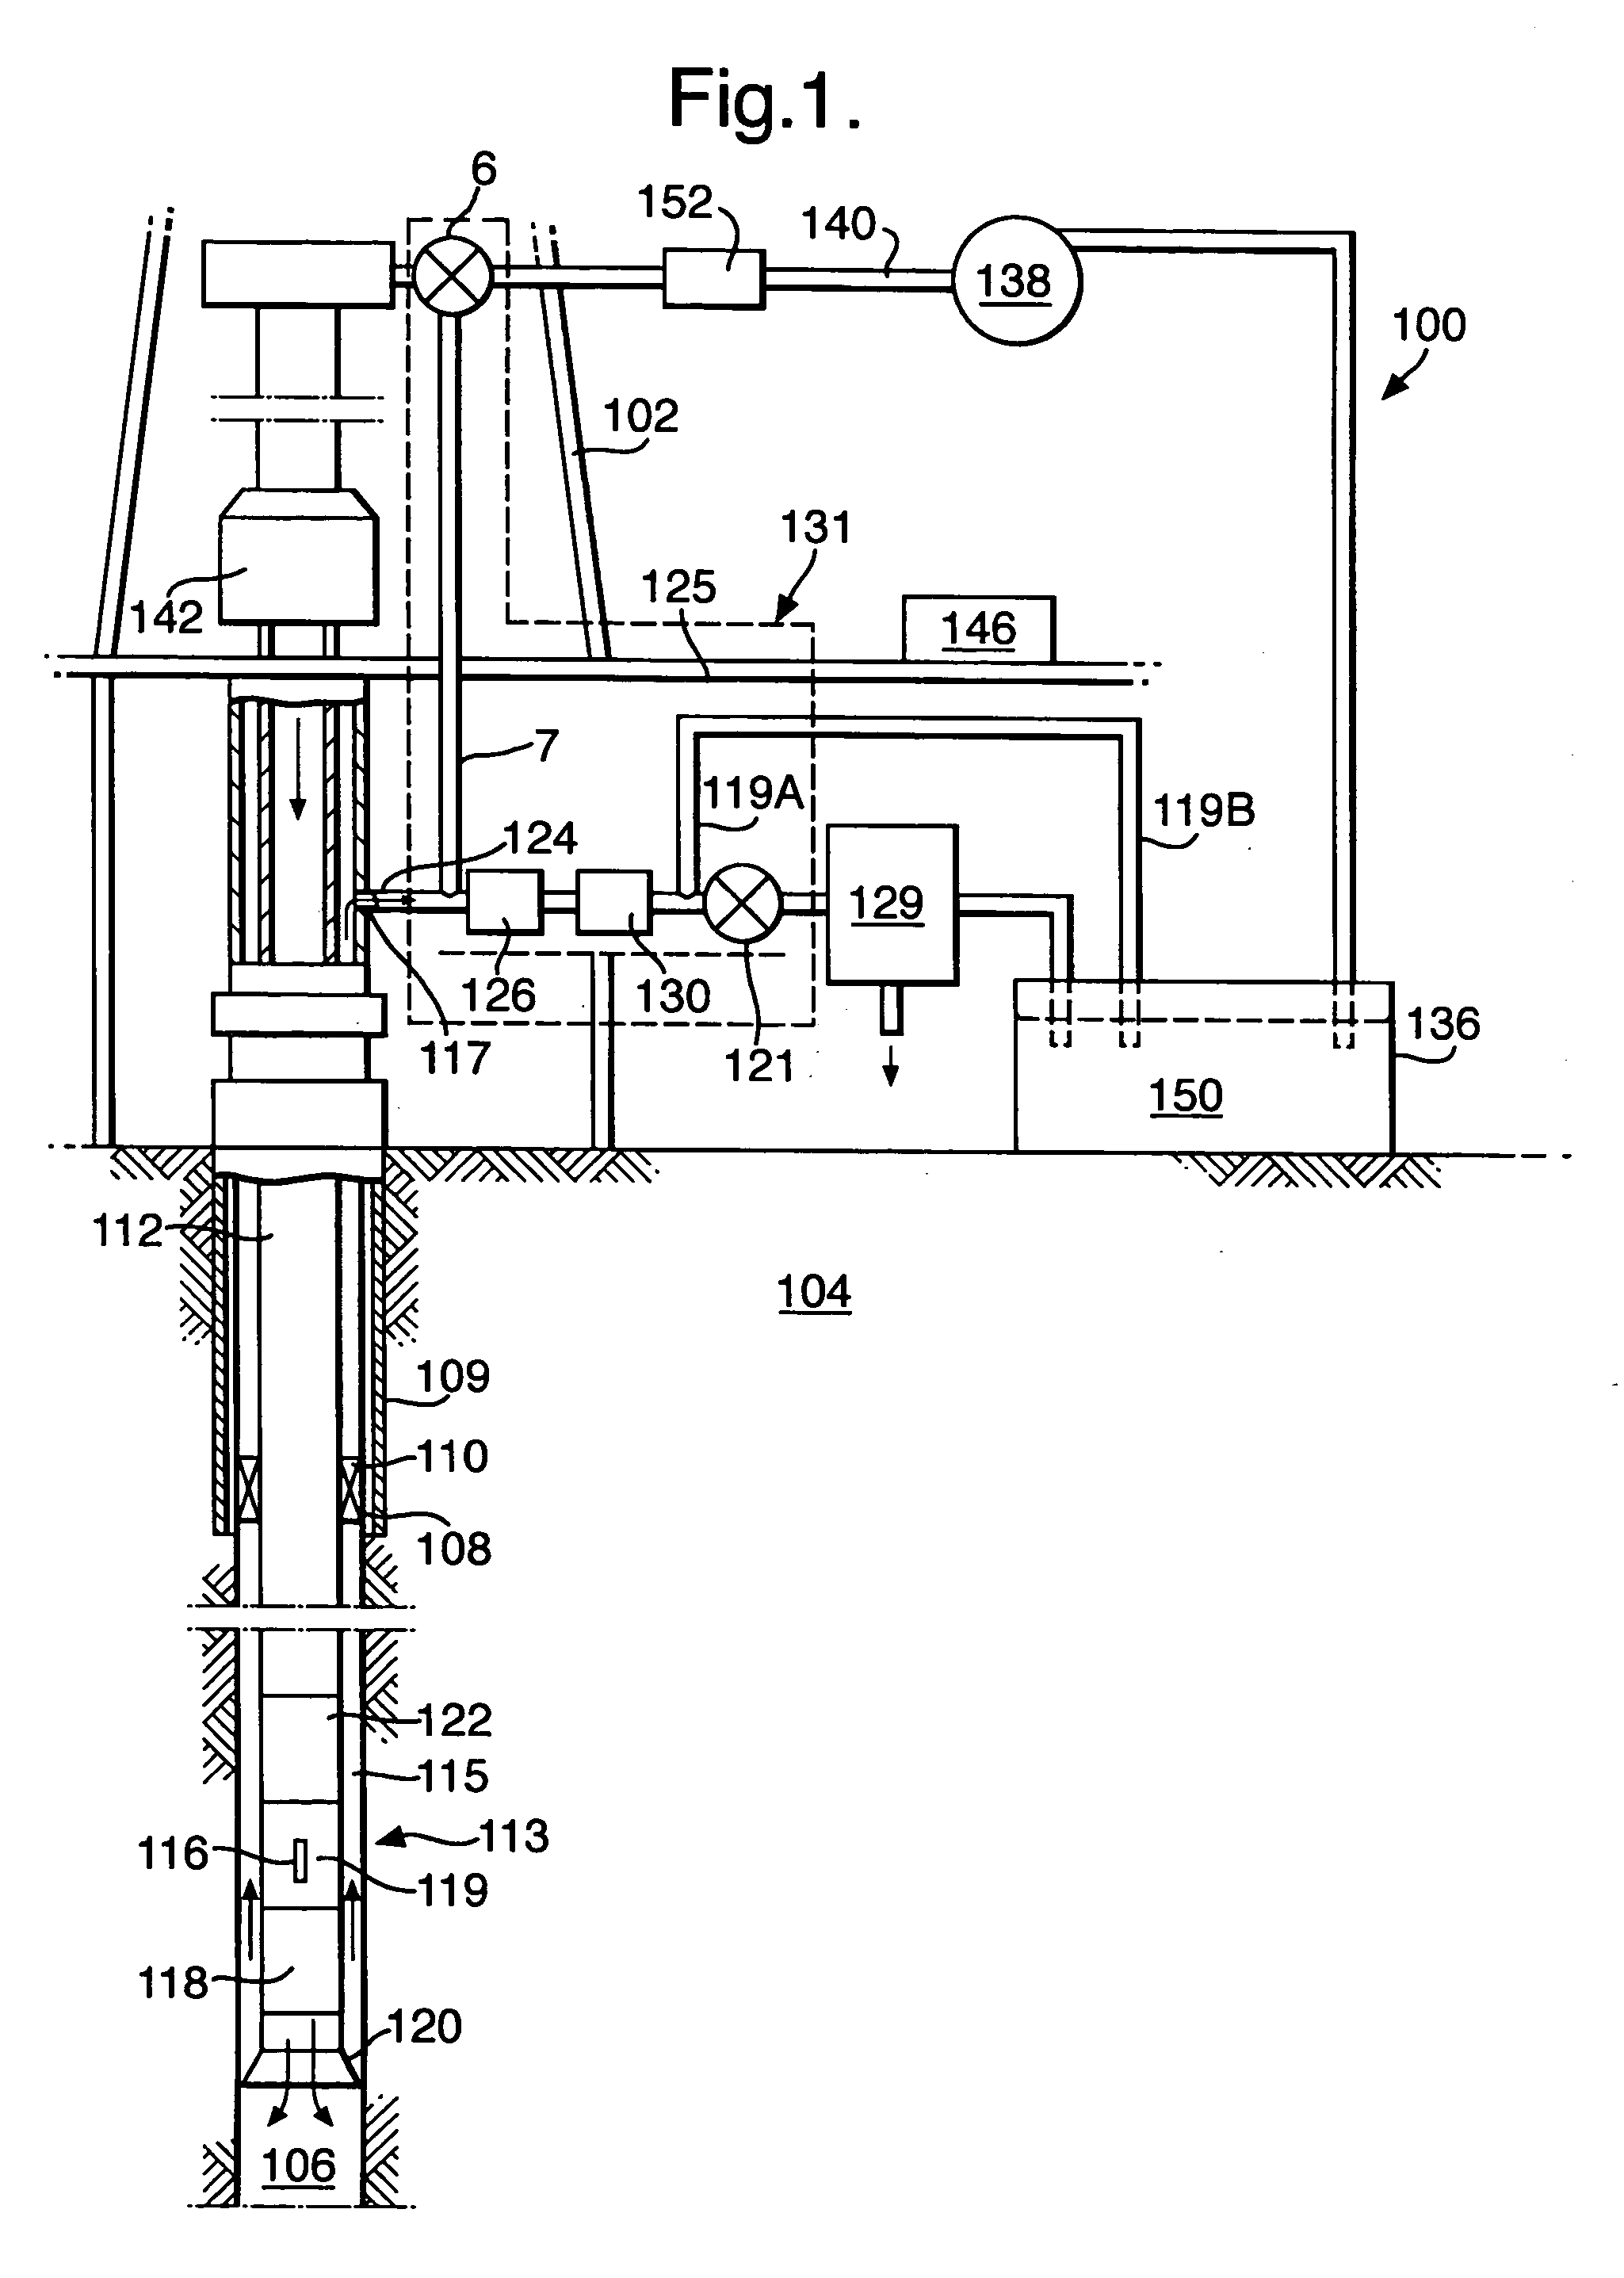 Dynamic annular pressure control apparatus and method